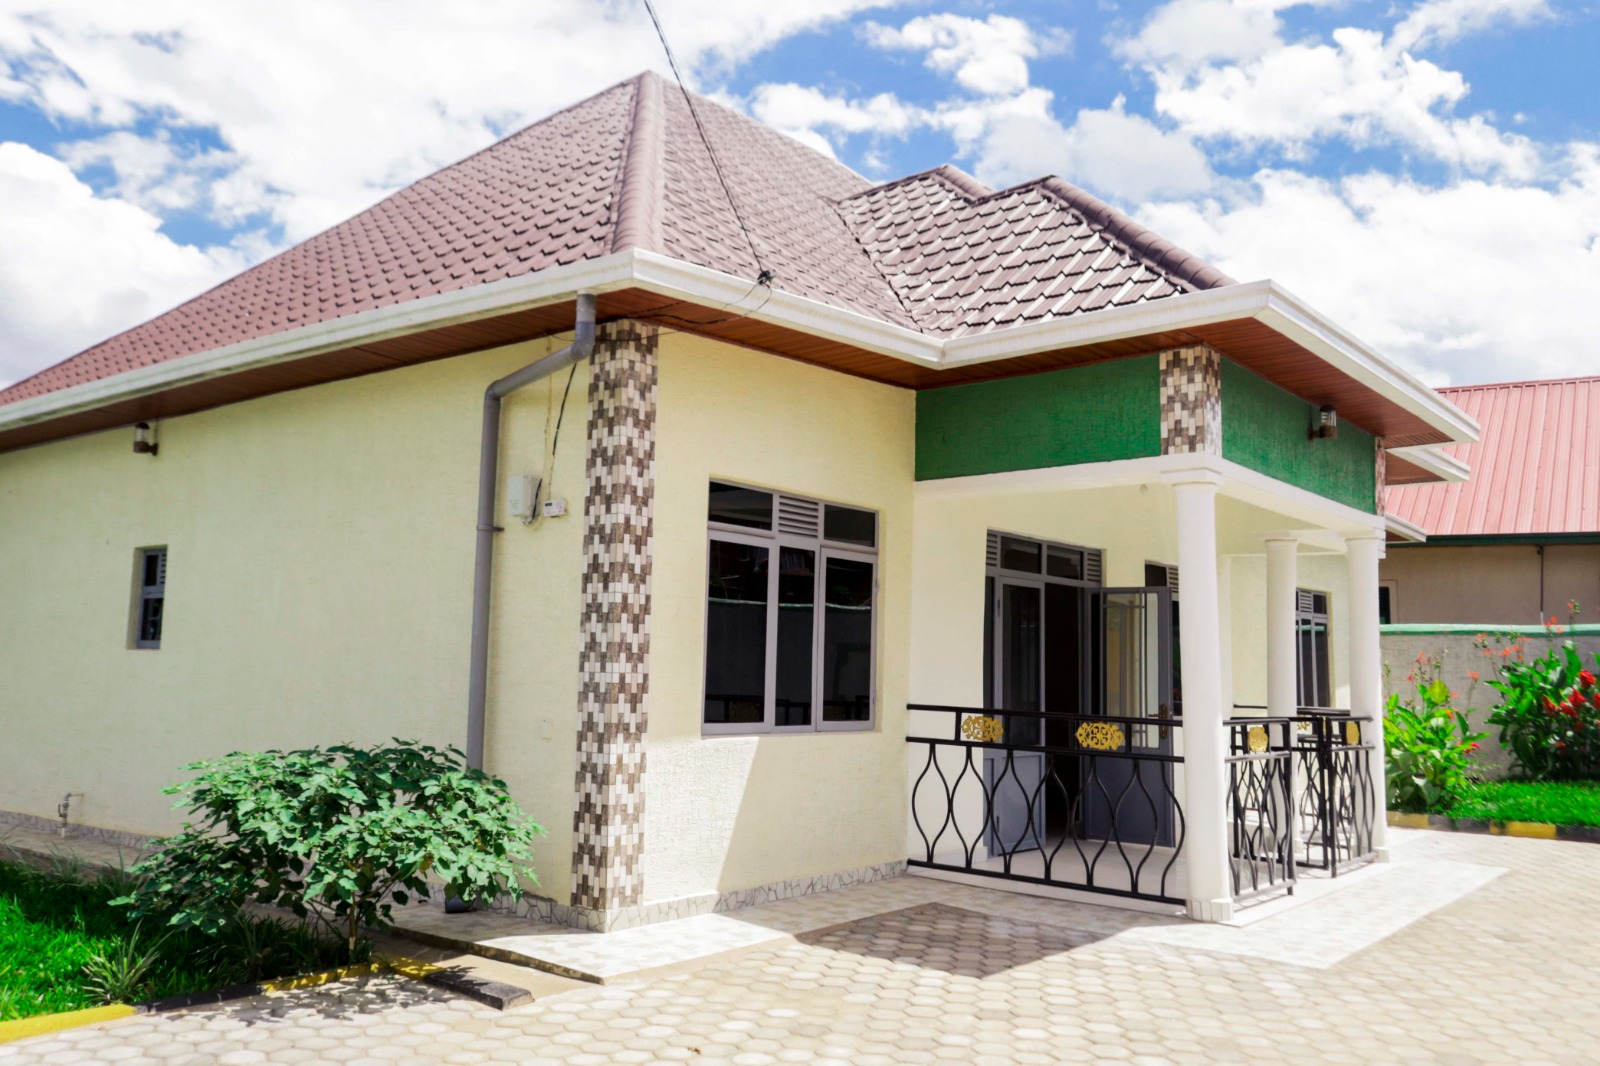 RR 034 Kabeza near RAB, a nice house for sell in kigali-Rwanda Call/watsap +250788385831